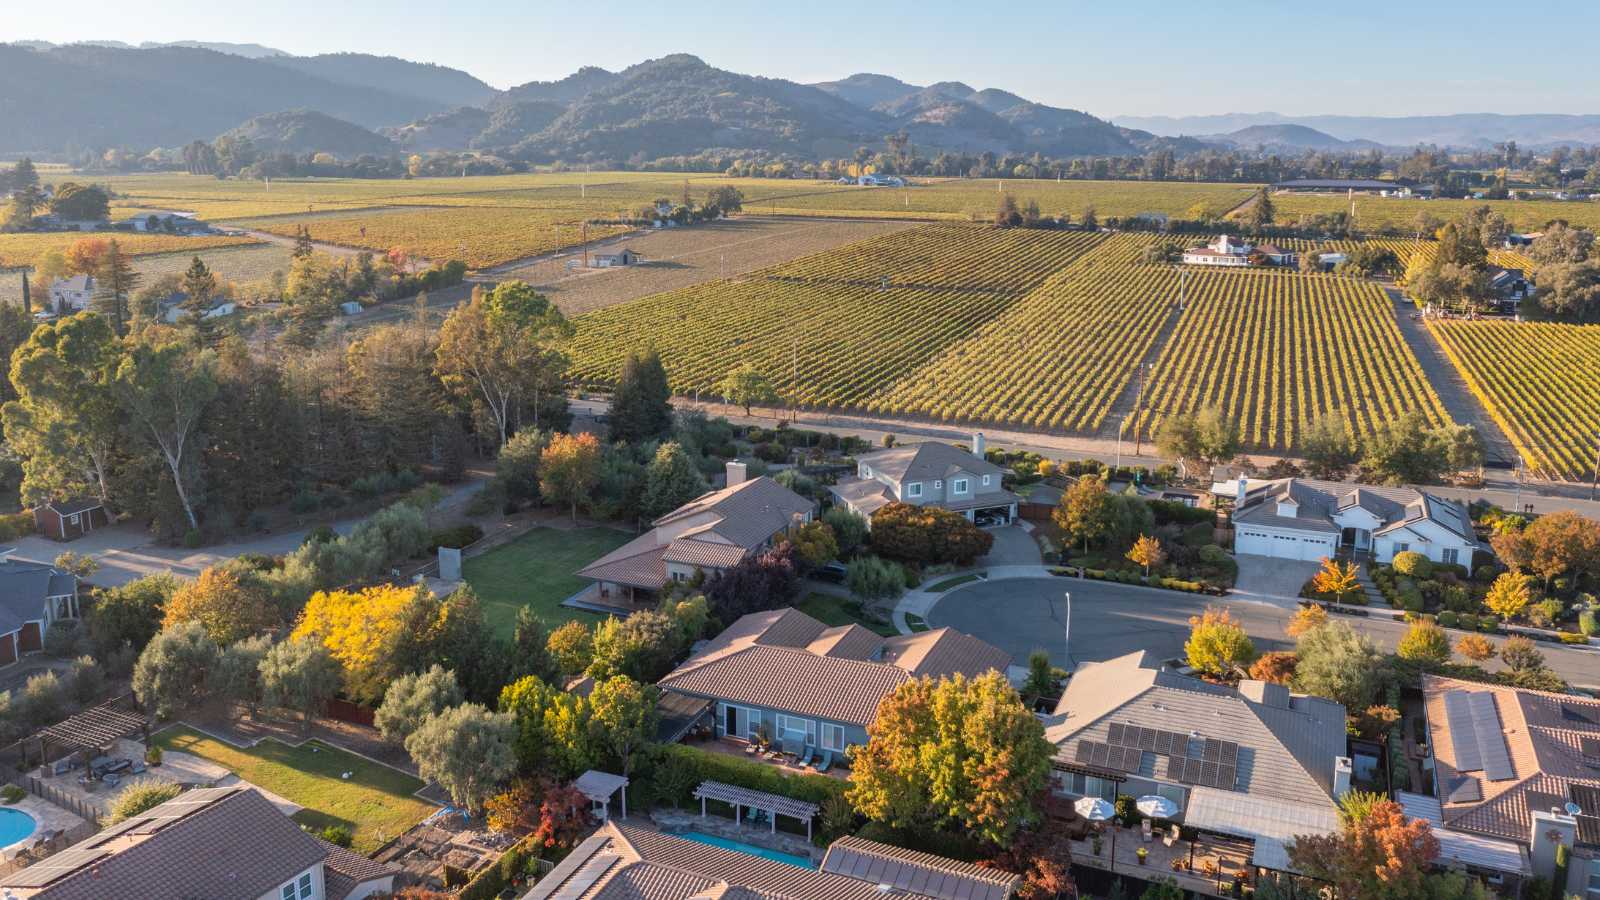 Aerial view of napa vacation homes among the vineyards